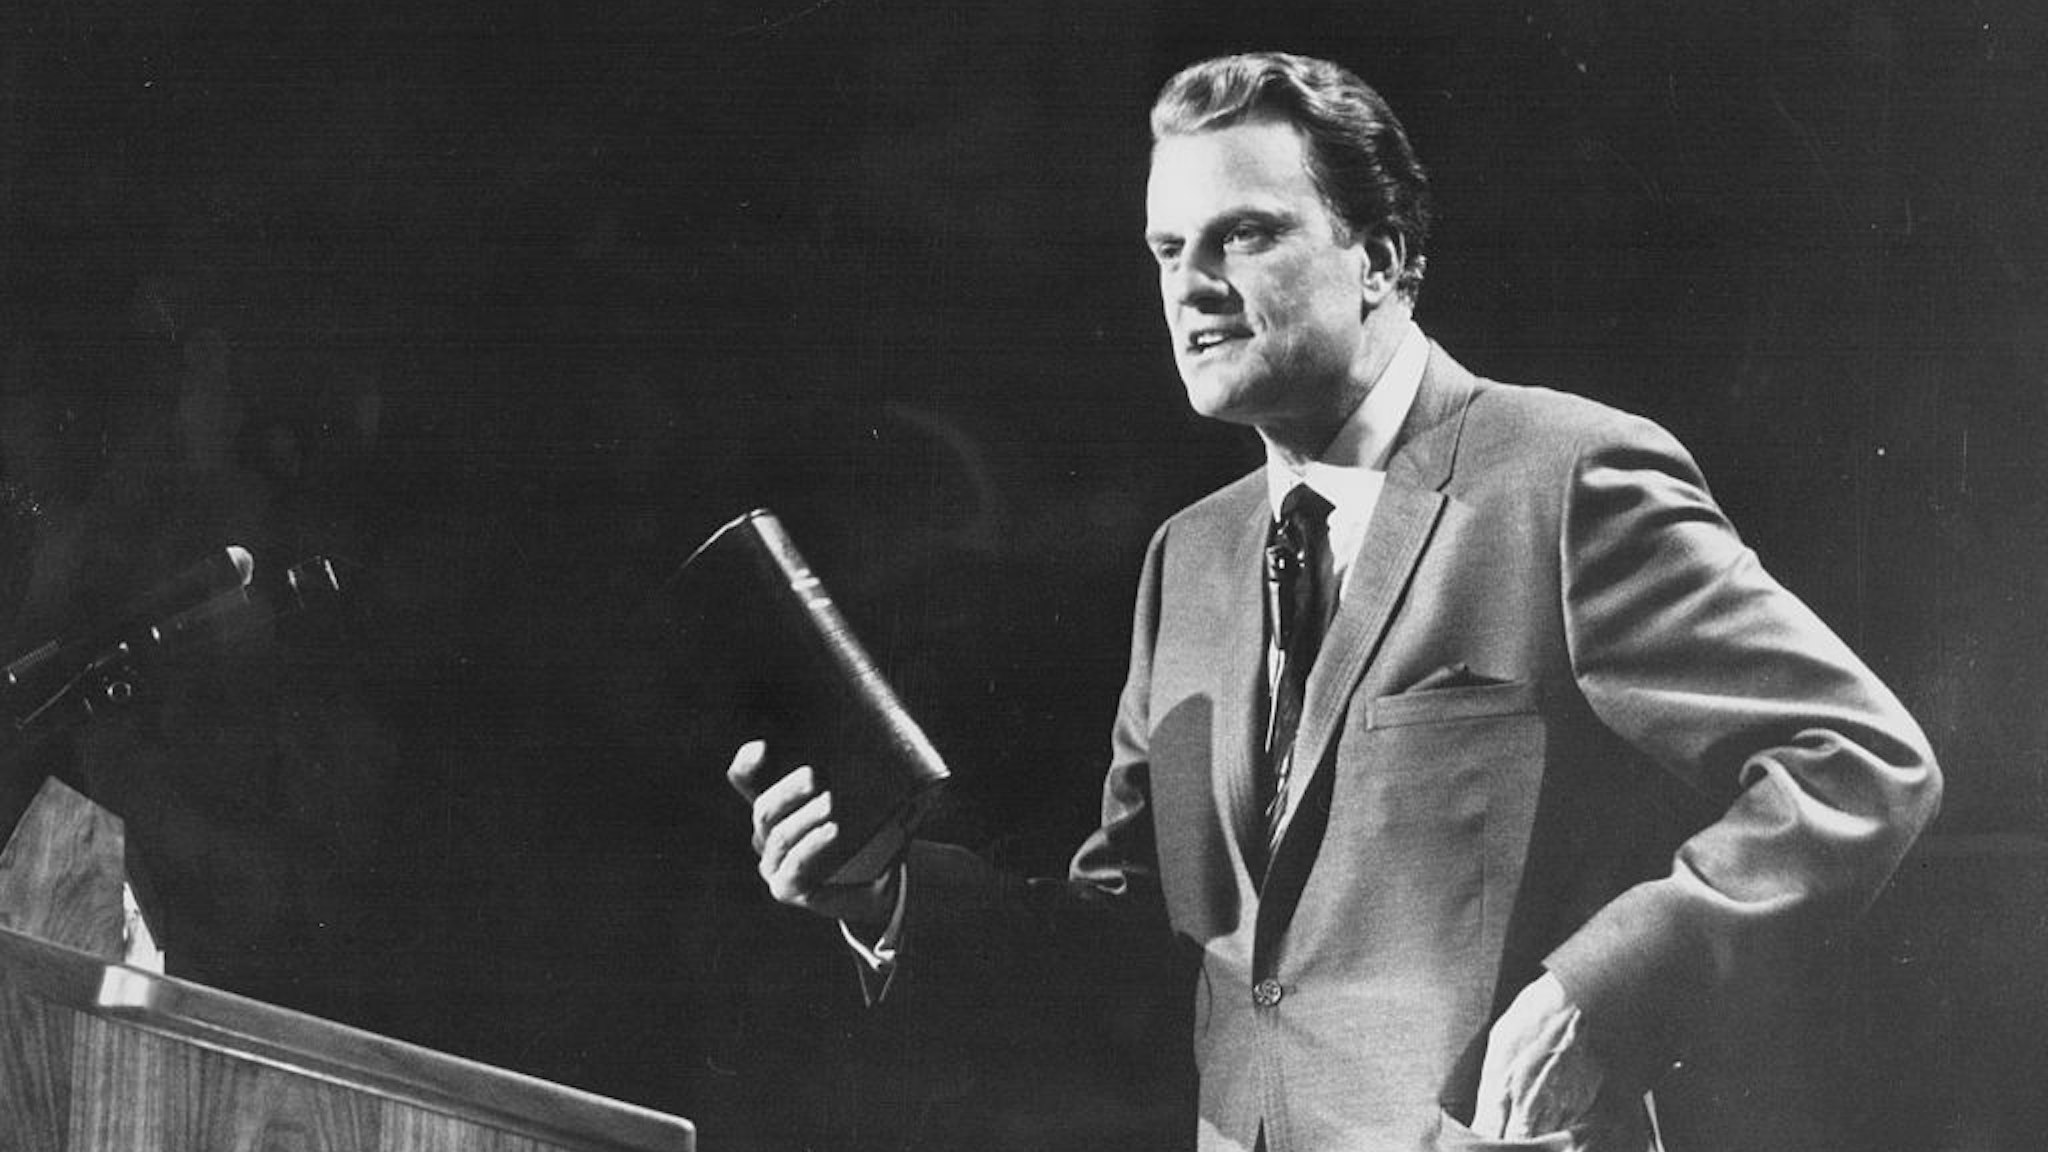 American evangelist Billy Graham, giving a speech on stage, circa 1970.